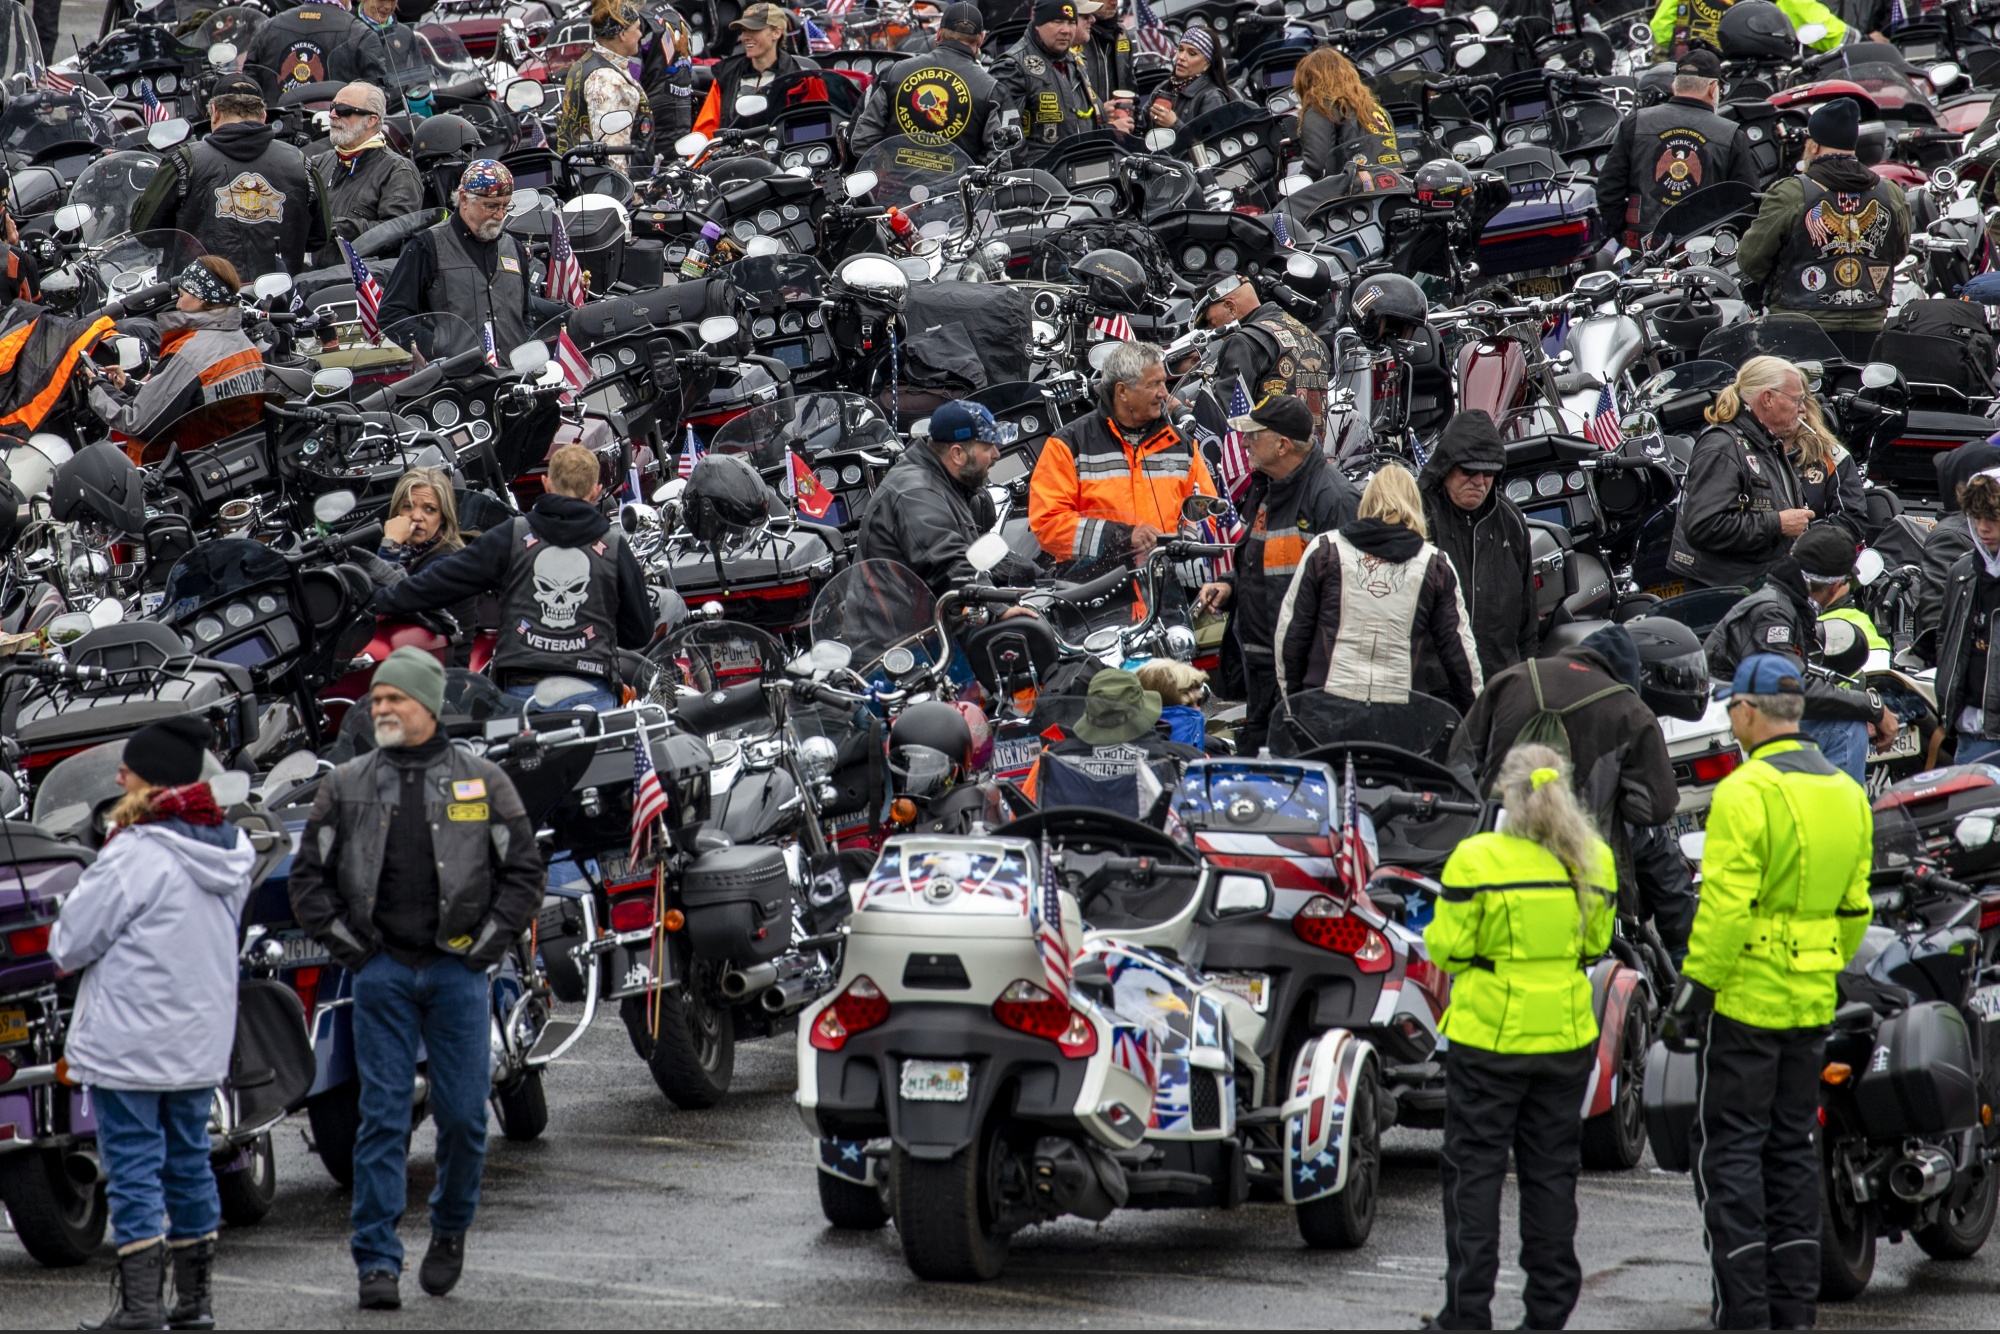 A motorcycle rally in Washington, DC.&nbsp;